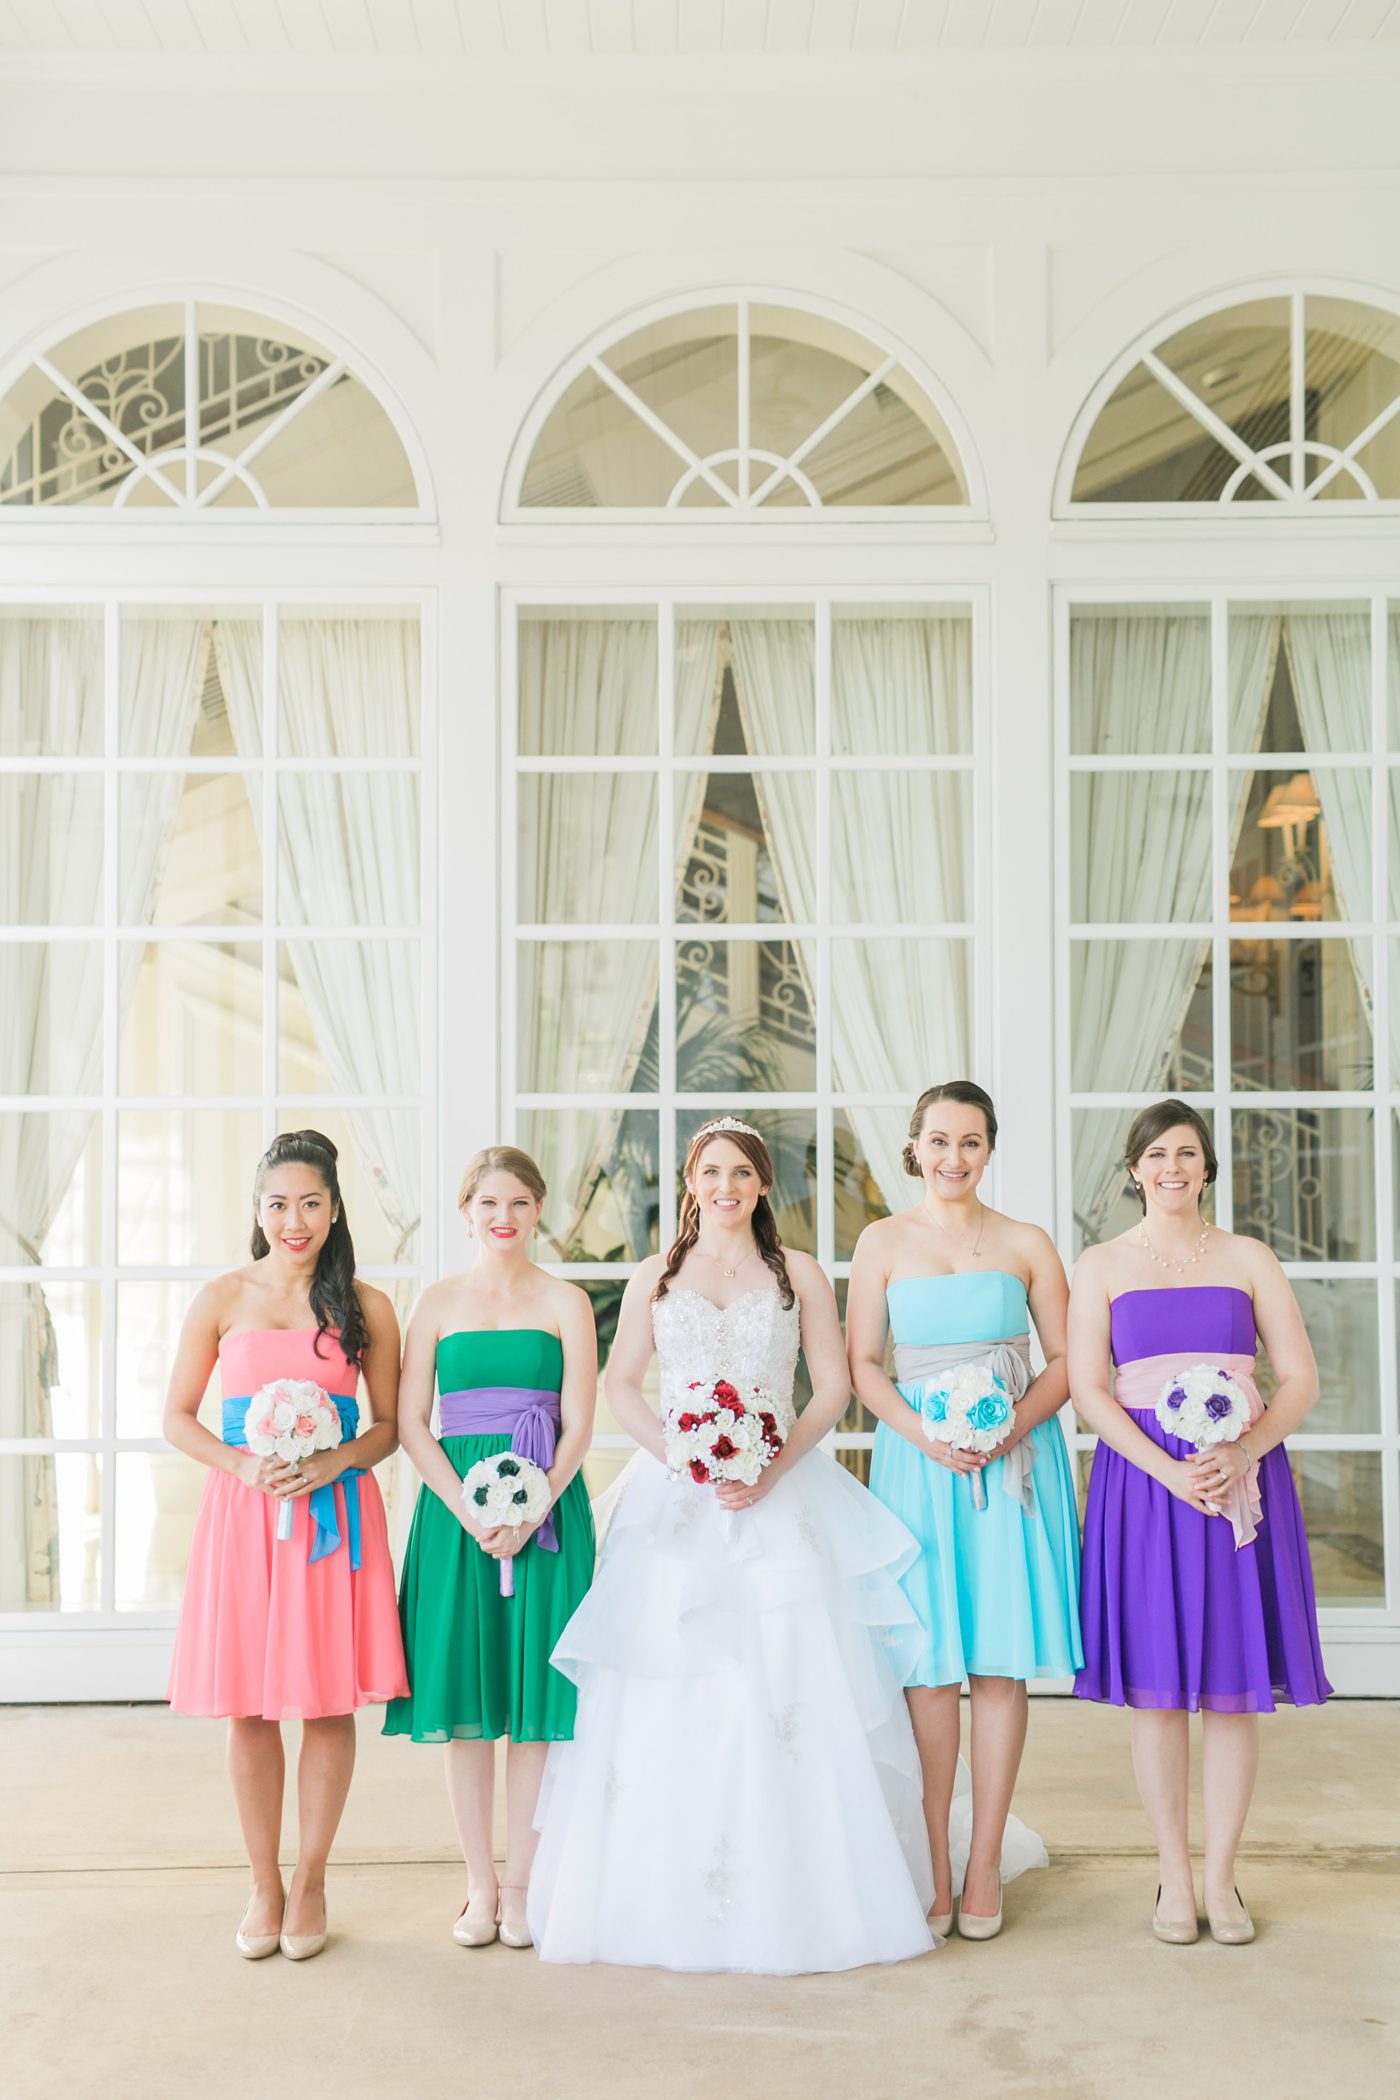 Bridesmaids as different Disney princesses for Disney World wedding